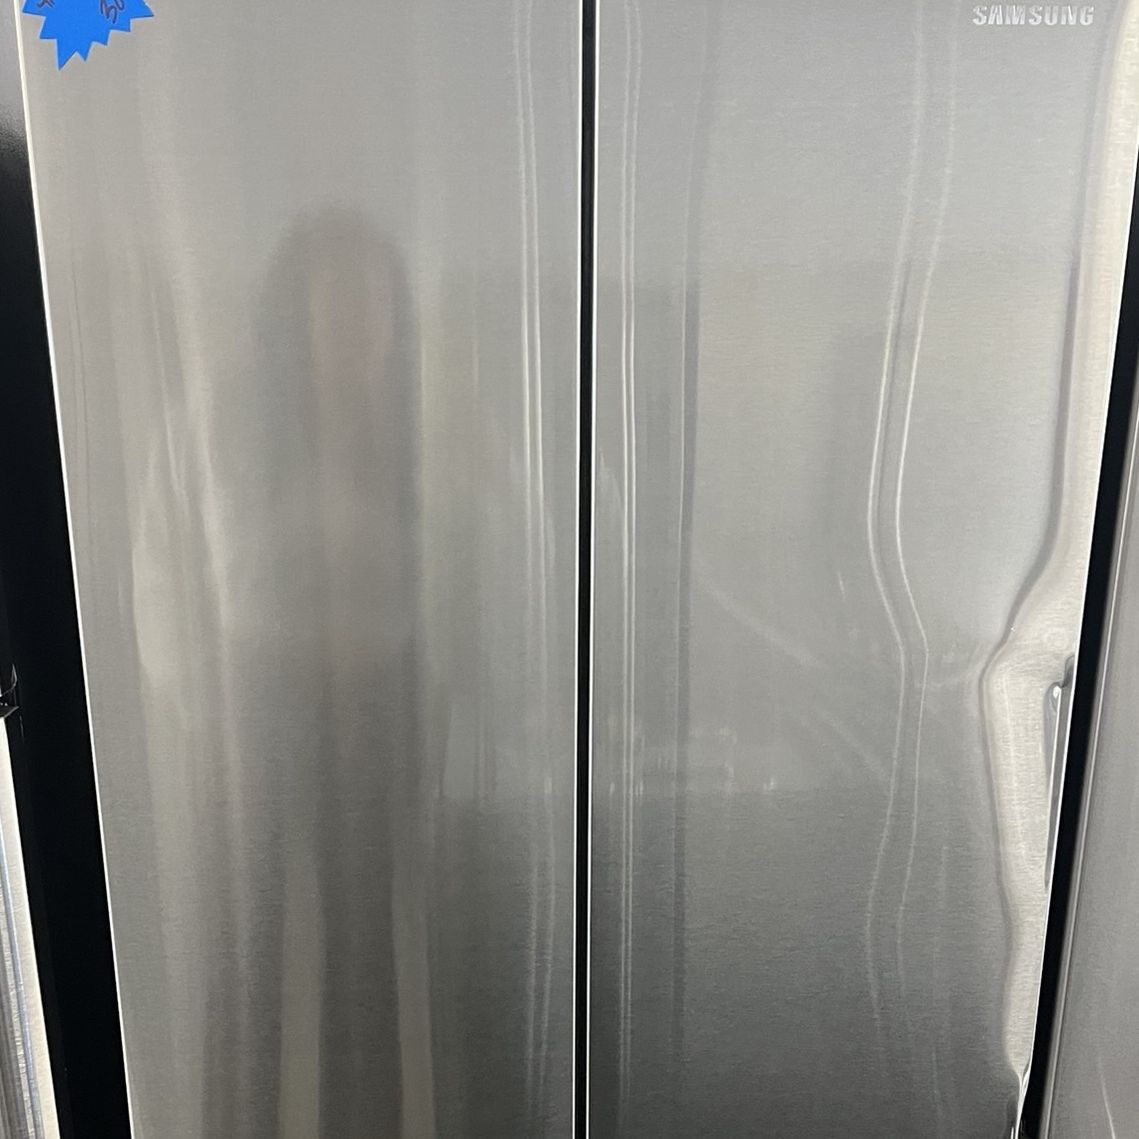 ‼️‼️‼️ Samsung French Door Refrigerator Stainless Steel 30” Refrigerator ‼️‼️‼️